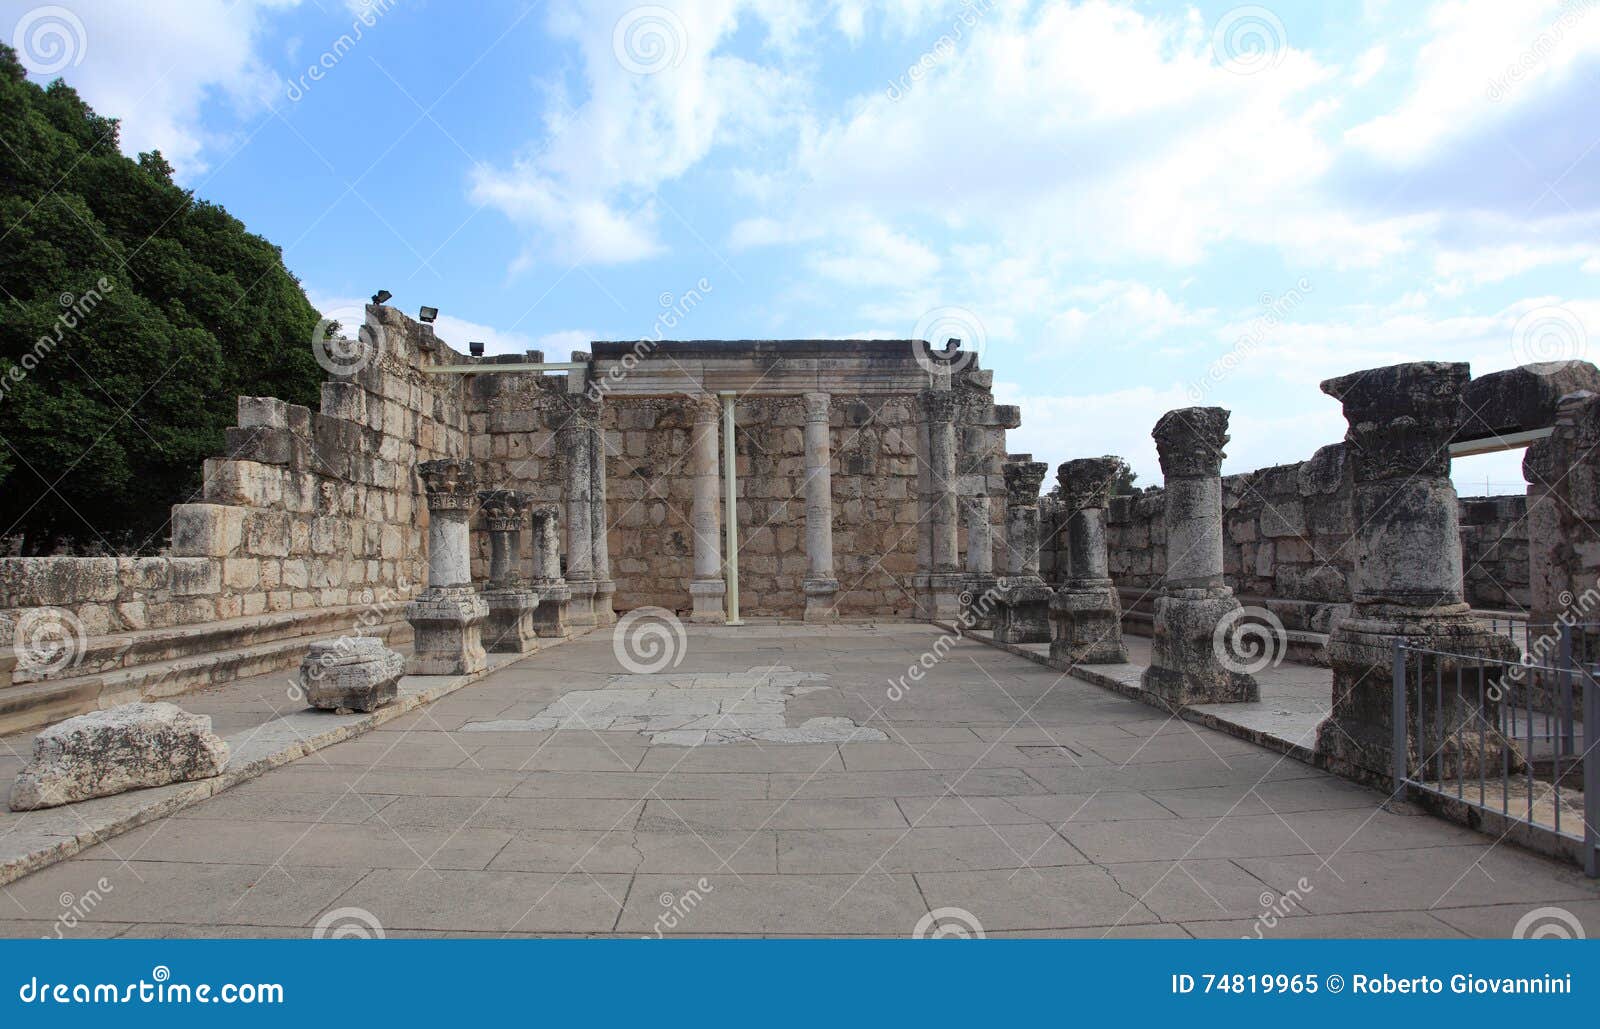 capernaum synagogue frontal view, israel